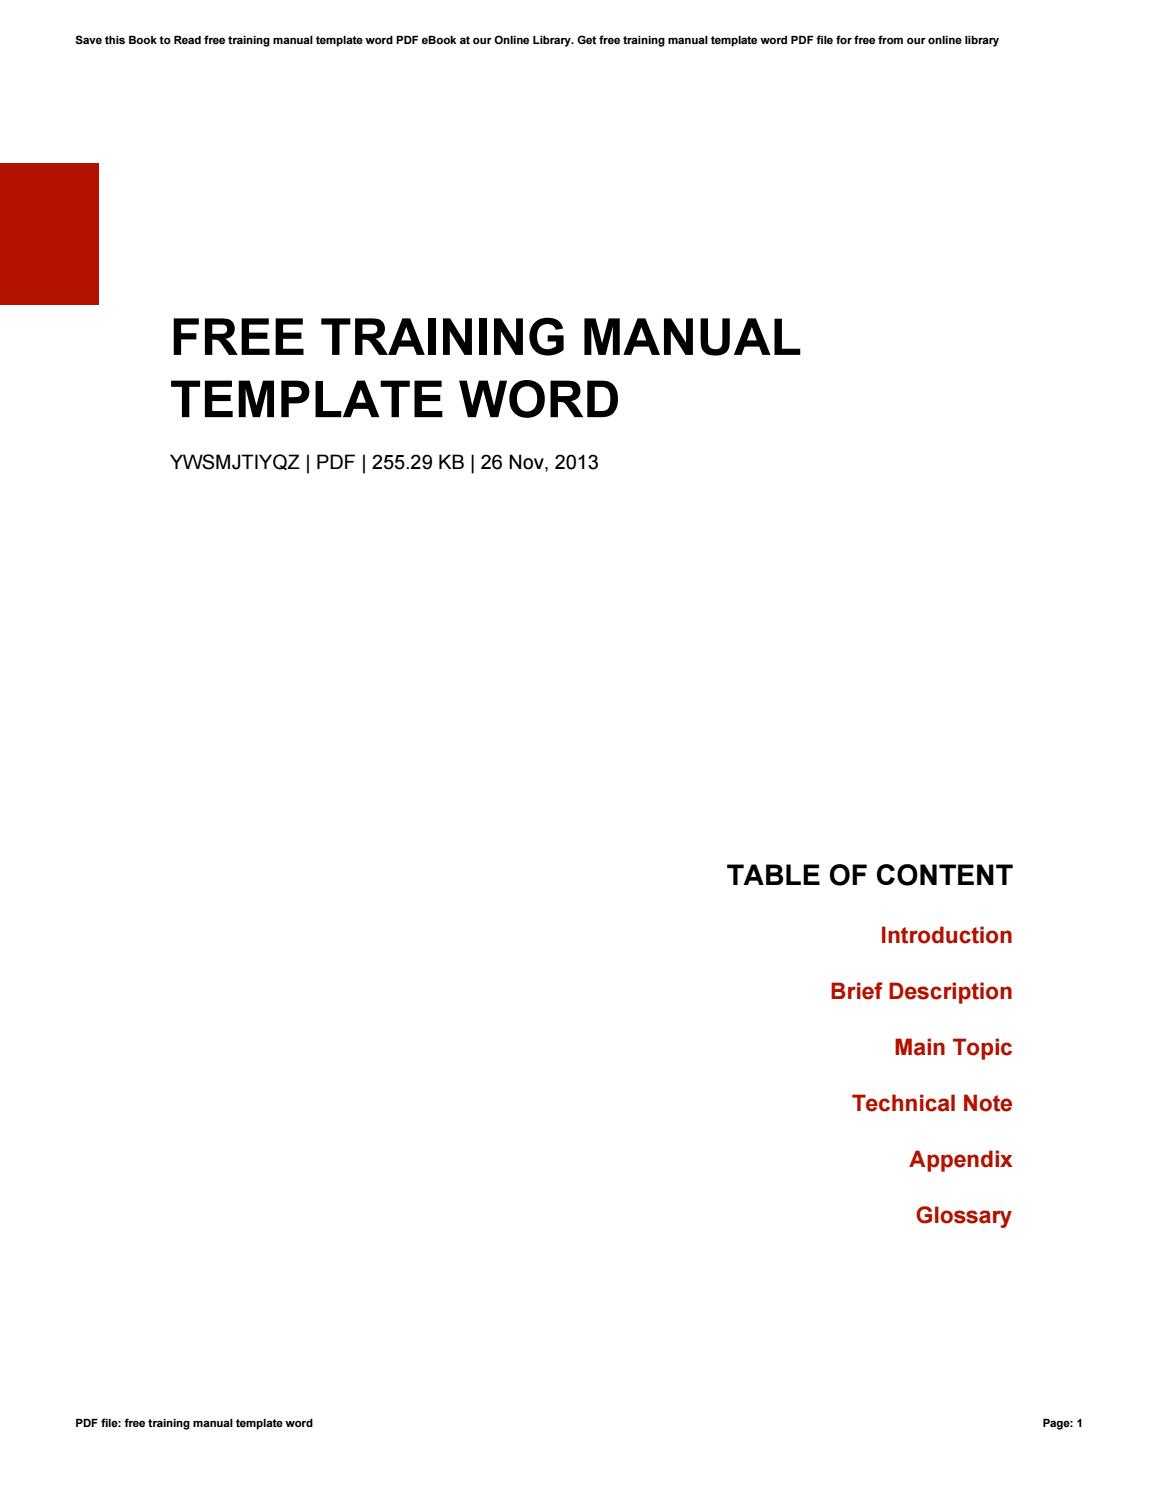 Free Training Manual Template Wordkazelink257 - Issuu Throughout Training Documentation Template Word